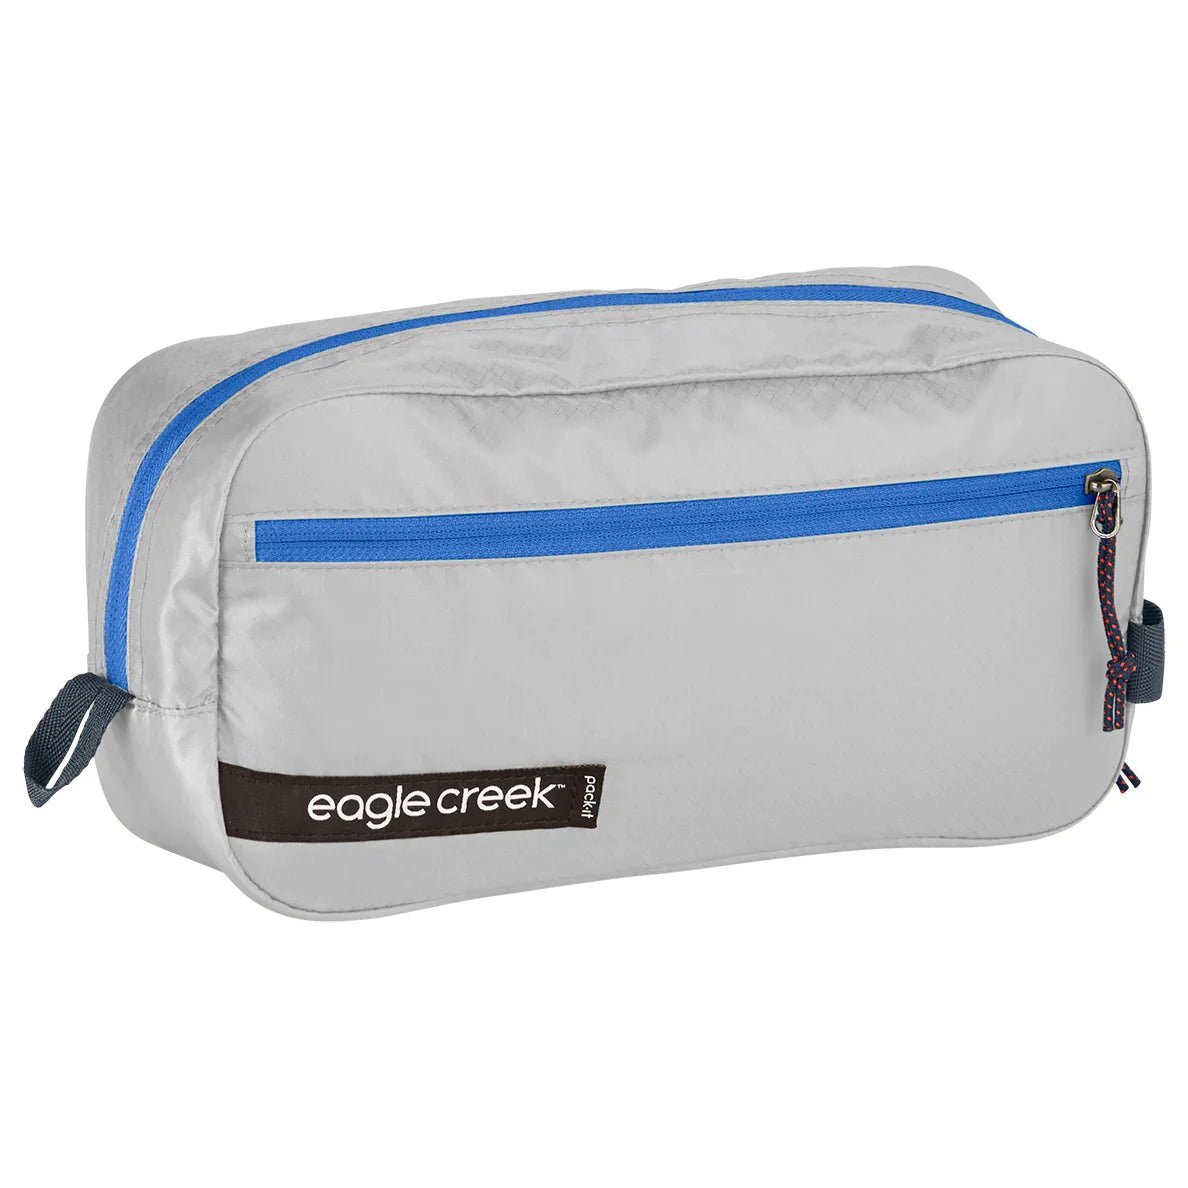 Eagle Creek Pack-It Isolate Quick Trip Toiletry Bag S 25 cm - az blue/grey